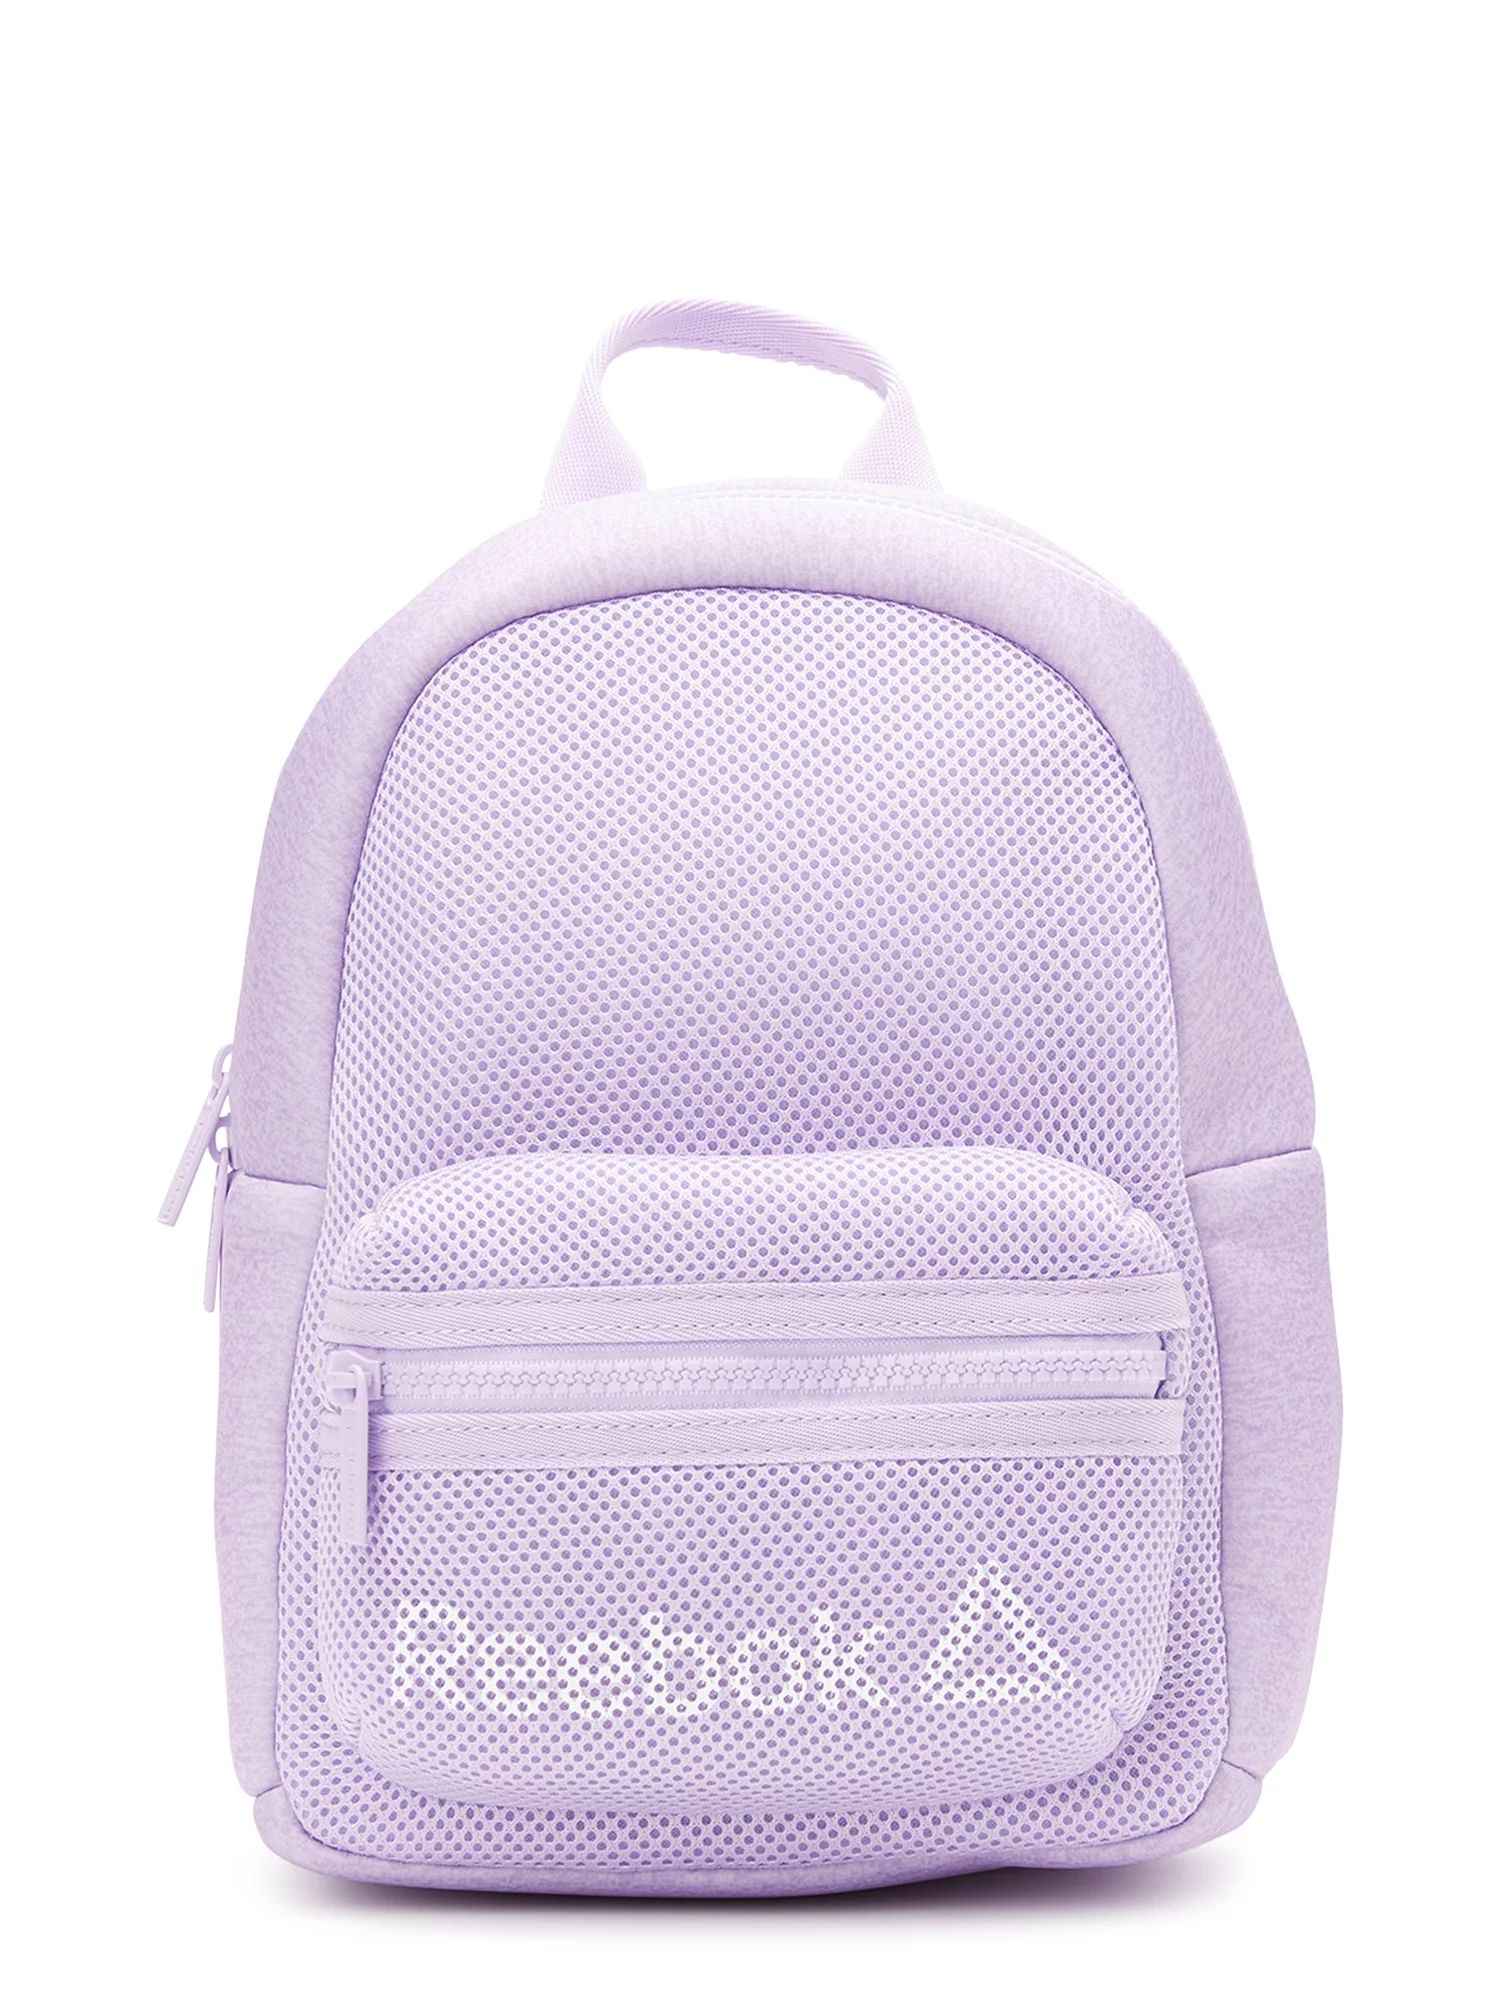 Reebok Women's Evie Mini Dome Backpack Purple | Walmart (US)